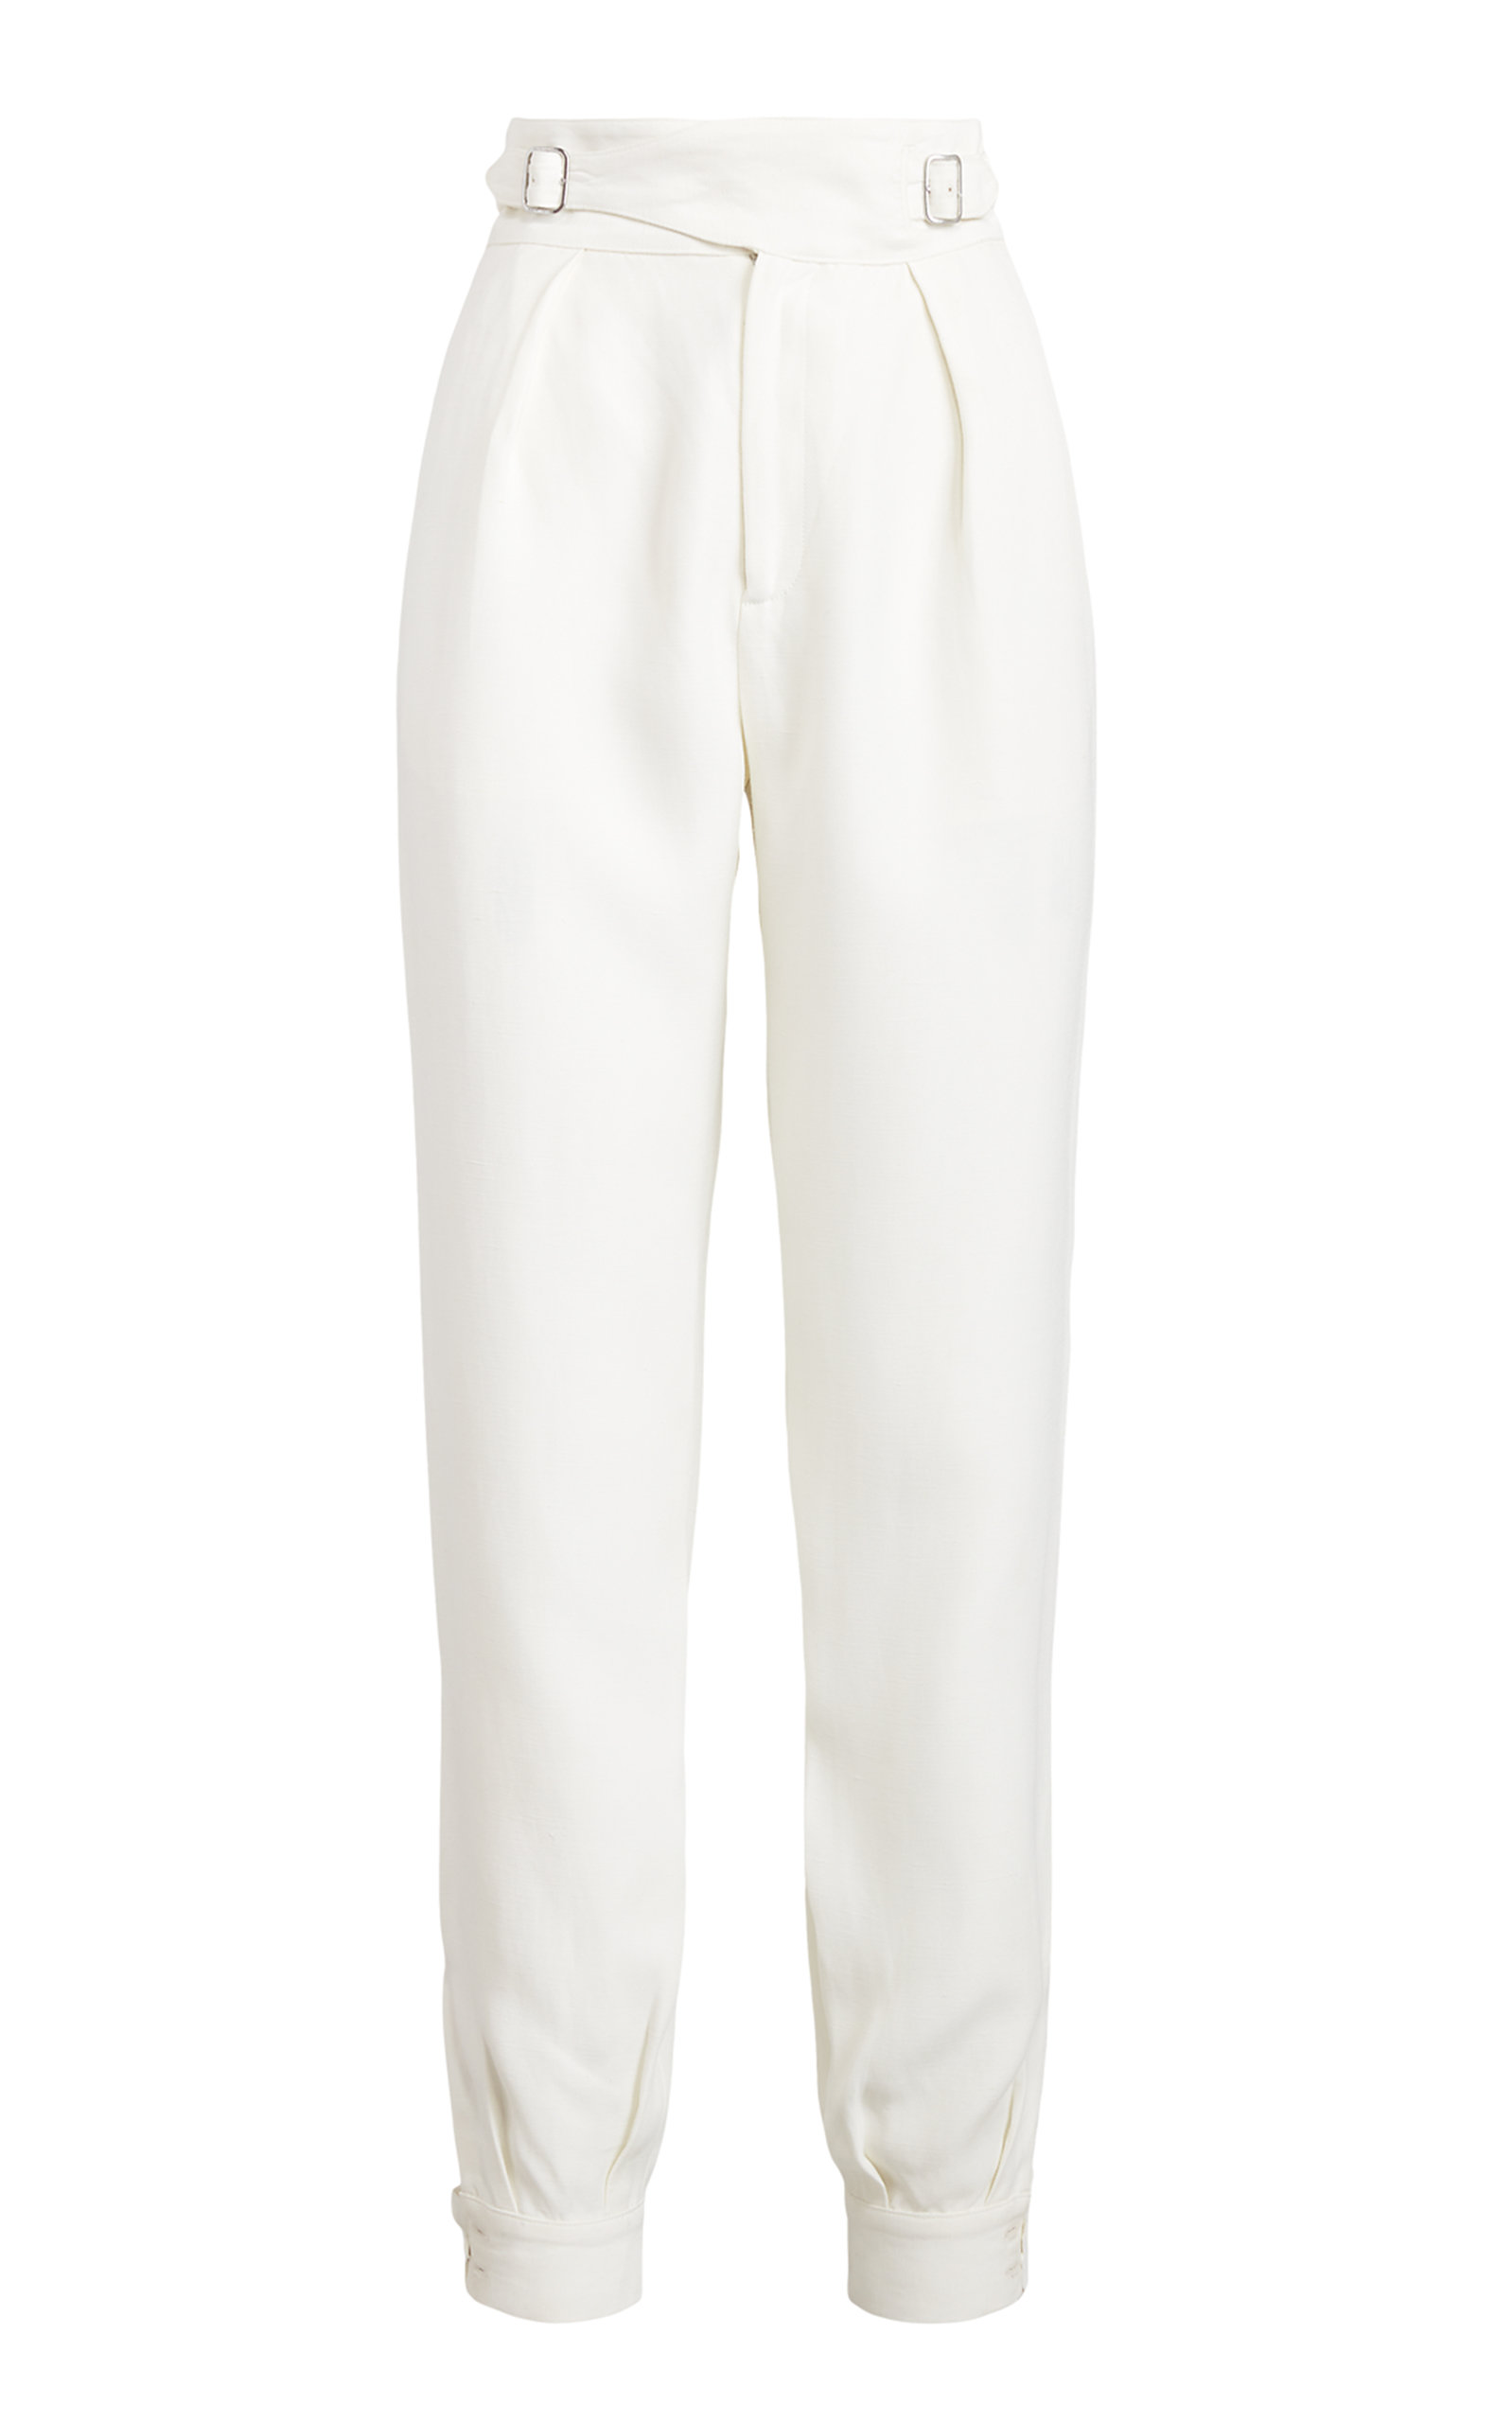 Ralph Lauren - Women's Viola Cuffed Pants - White - Moda Operandi